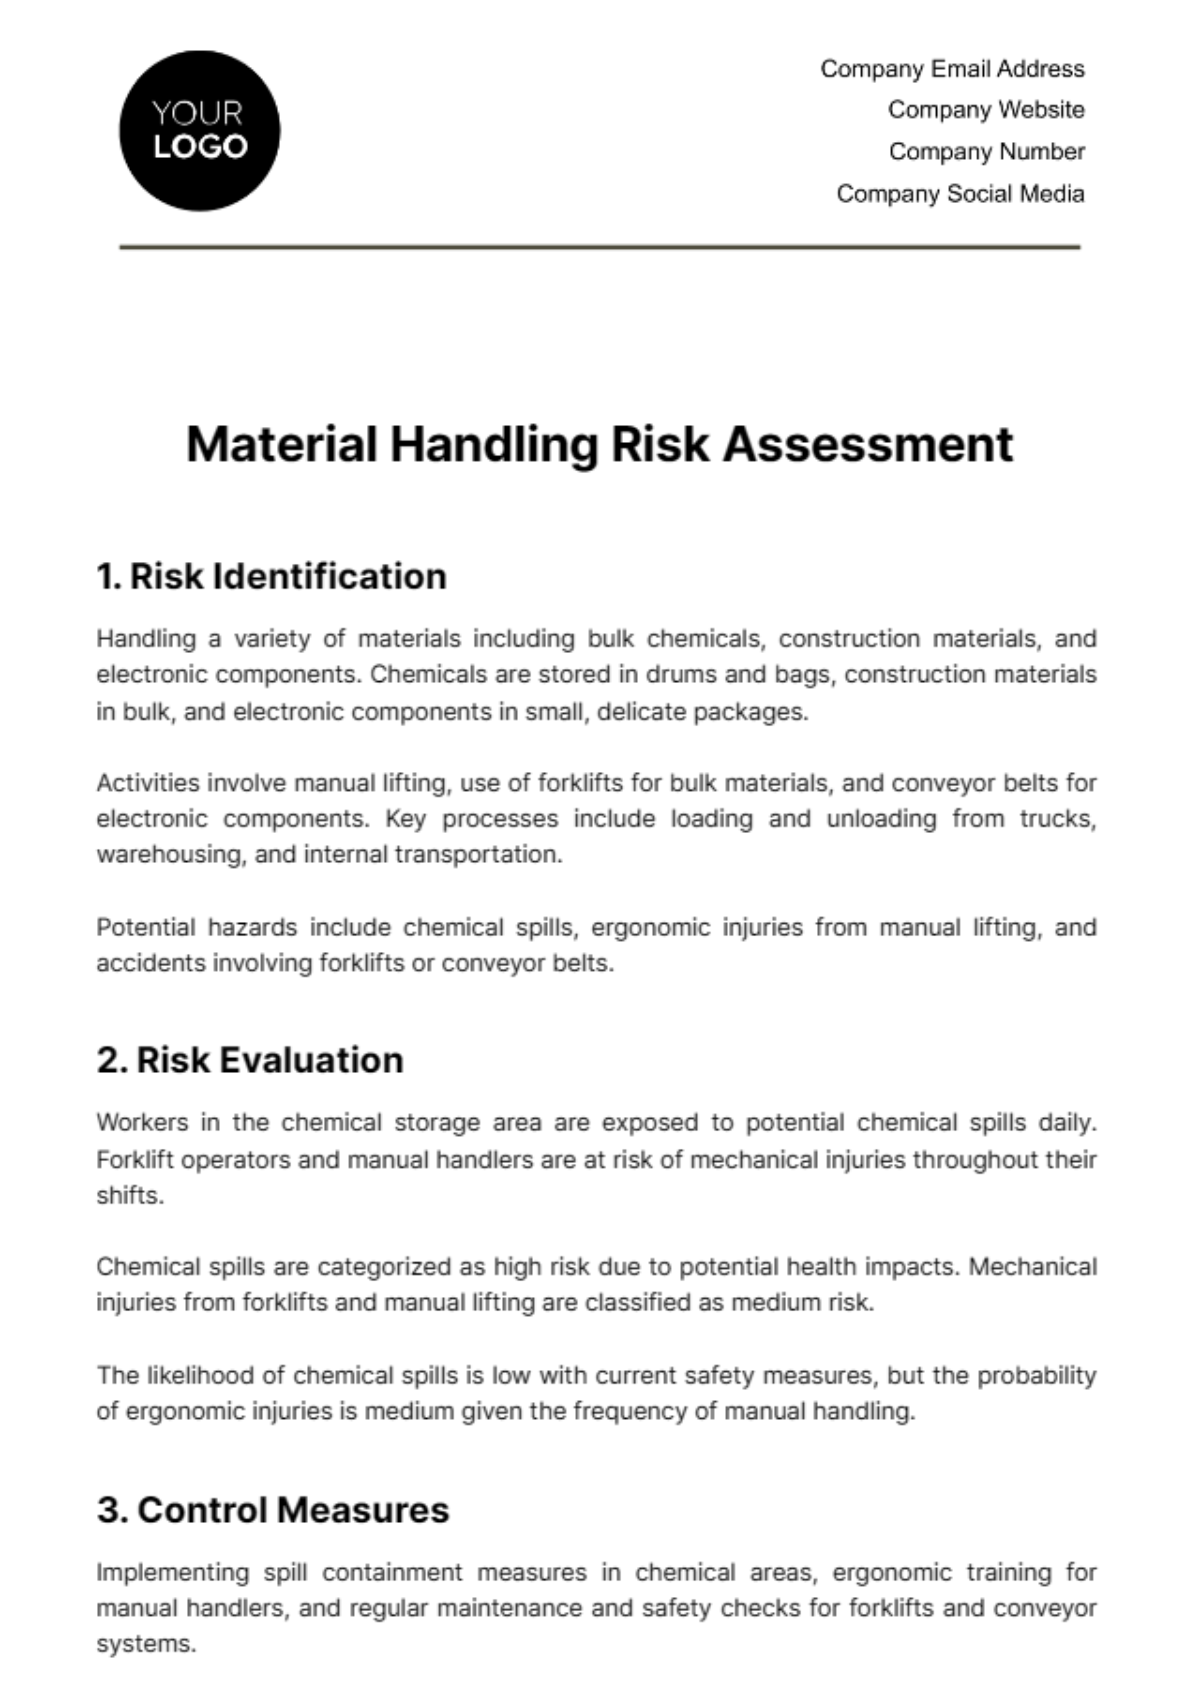 Free Material Handling Risk Assessment Template